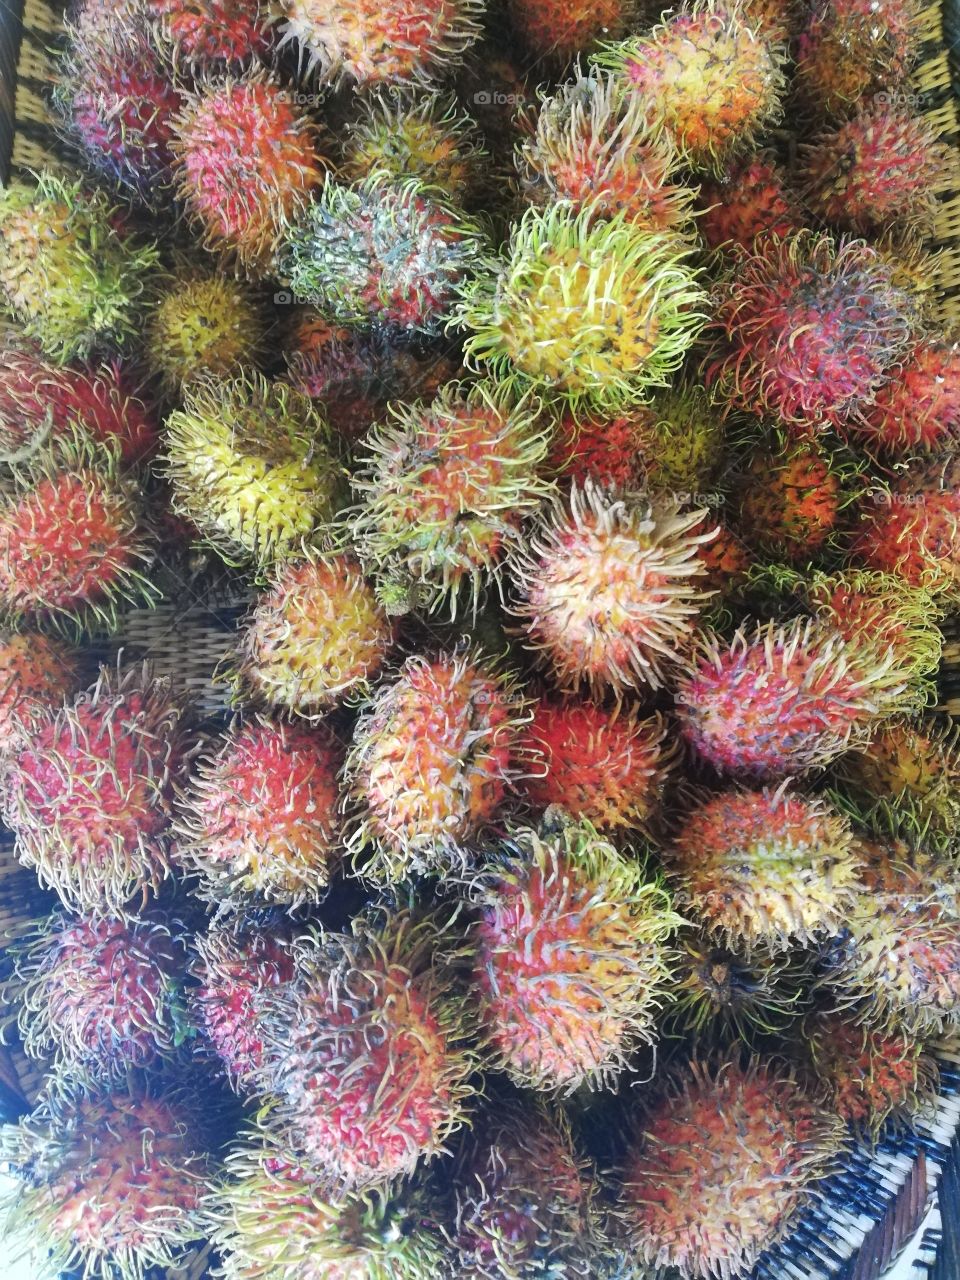 Sweet exotic tropical fruit Rambutan of Rambutan tree, farming product of Philippines